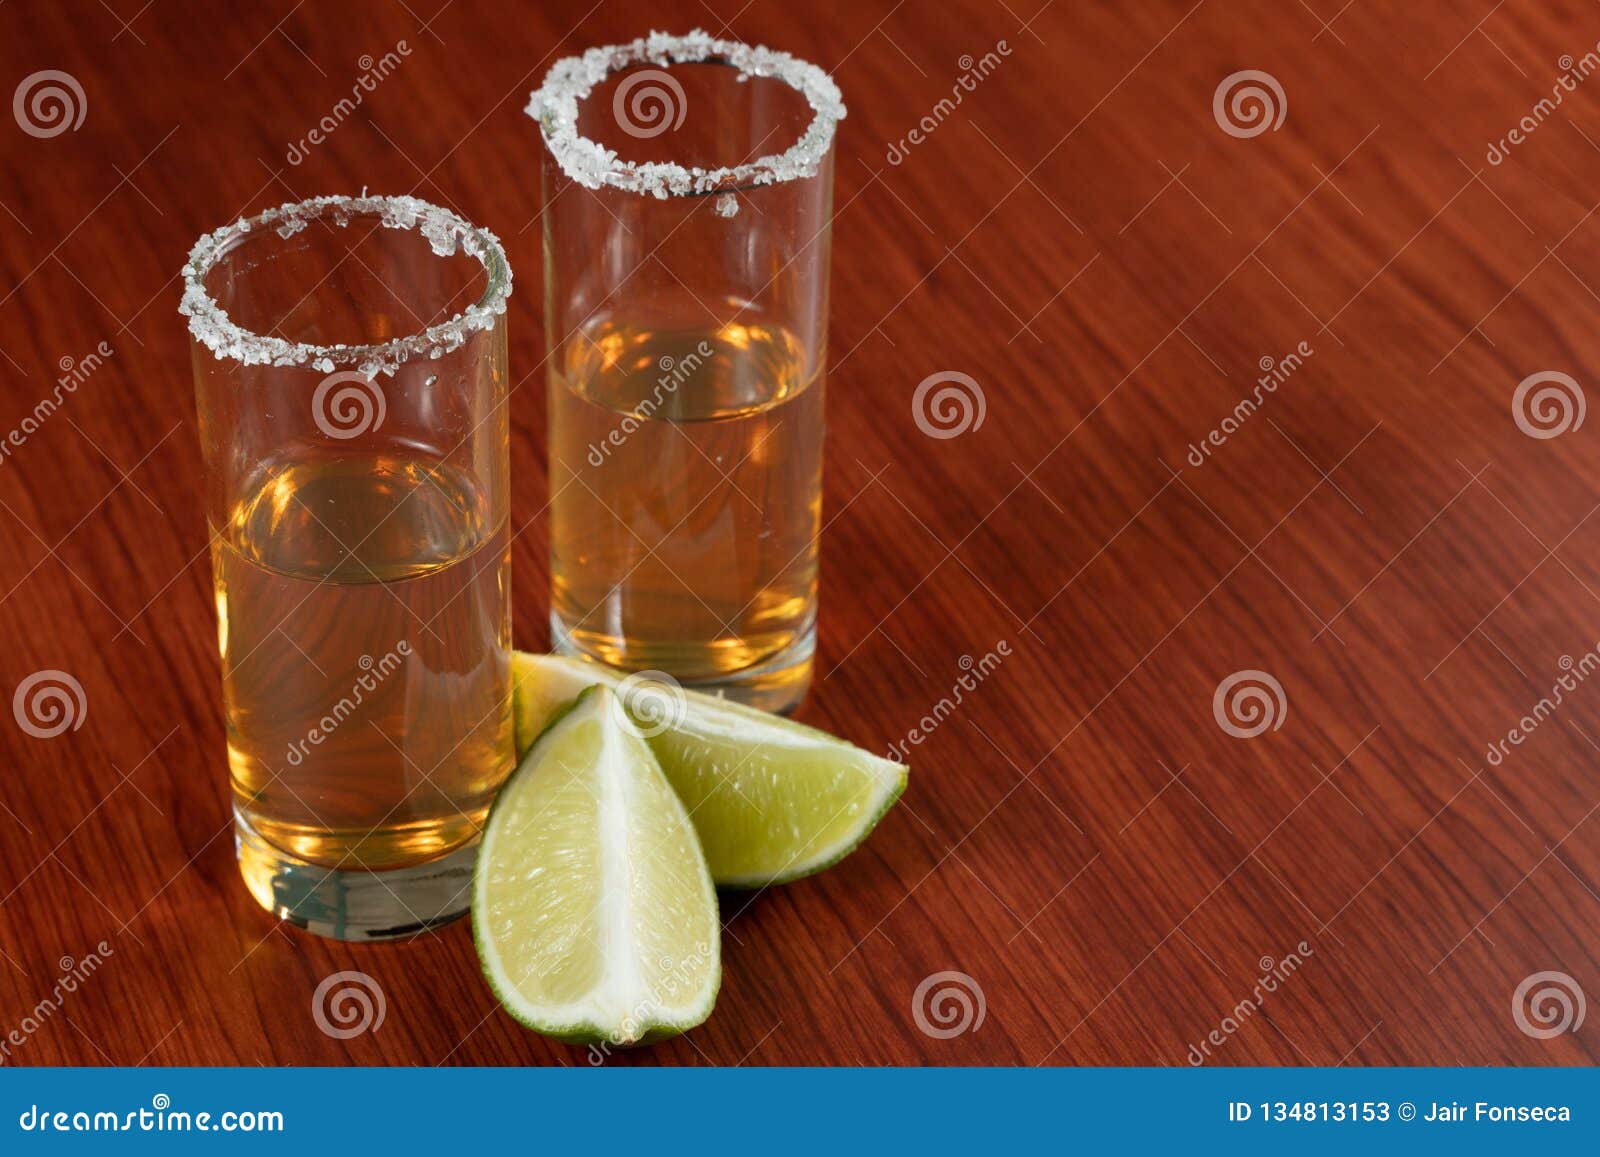 Golden Tequila with Lemon and Salt. Drinks, Liquor Stock Image - Image ...